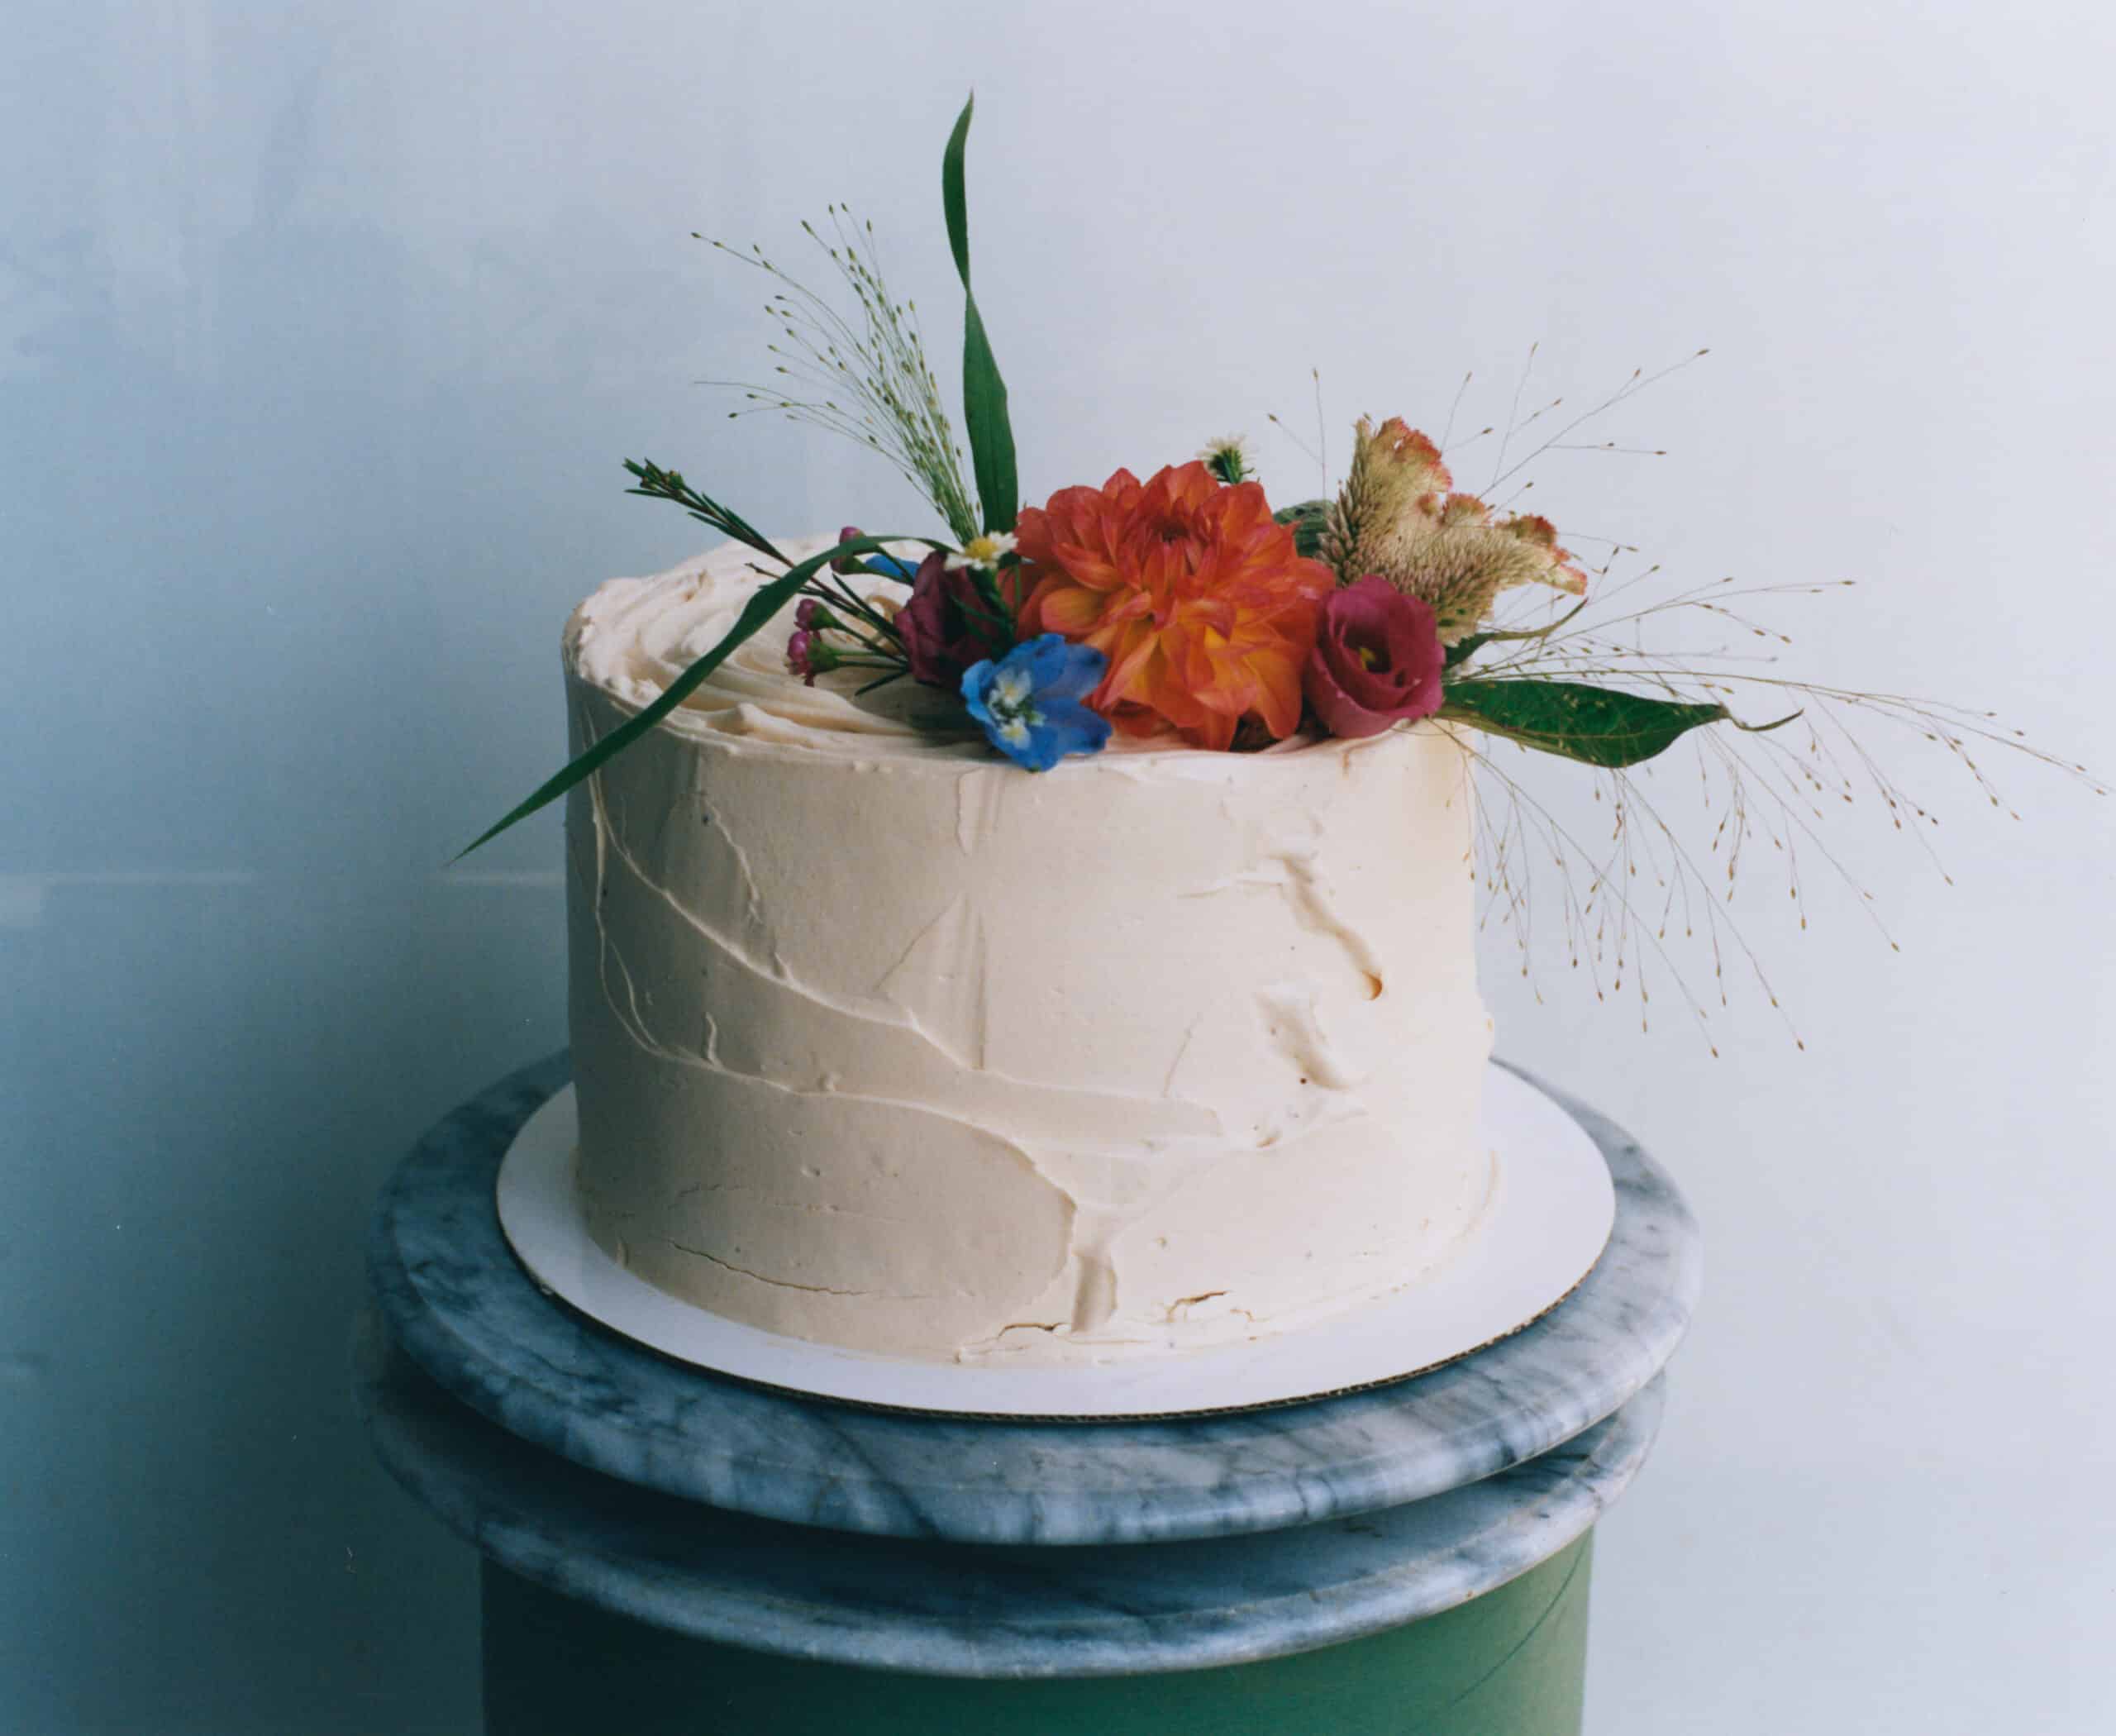 happy birthday flower cake bouquet